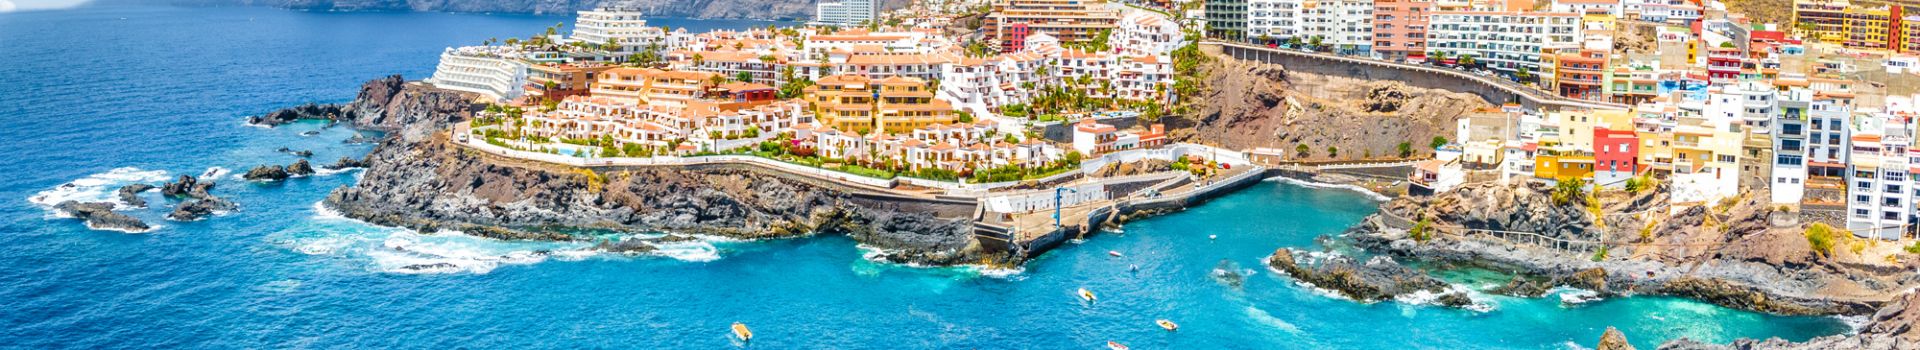 Summer Family Holidays to Tenerife | Book Flights & Hotel | Cassidy Travel